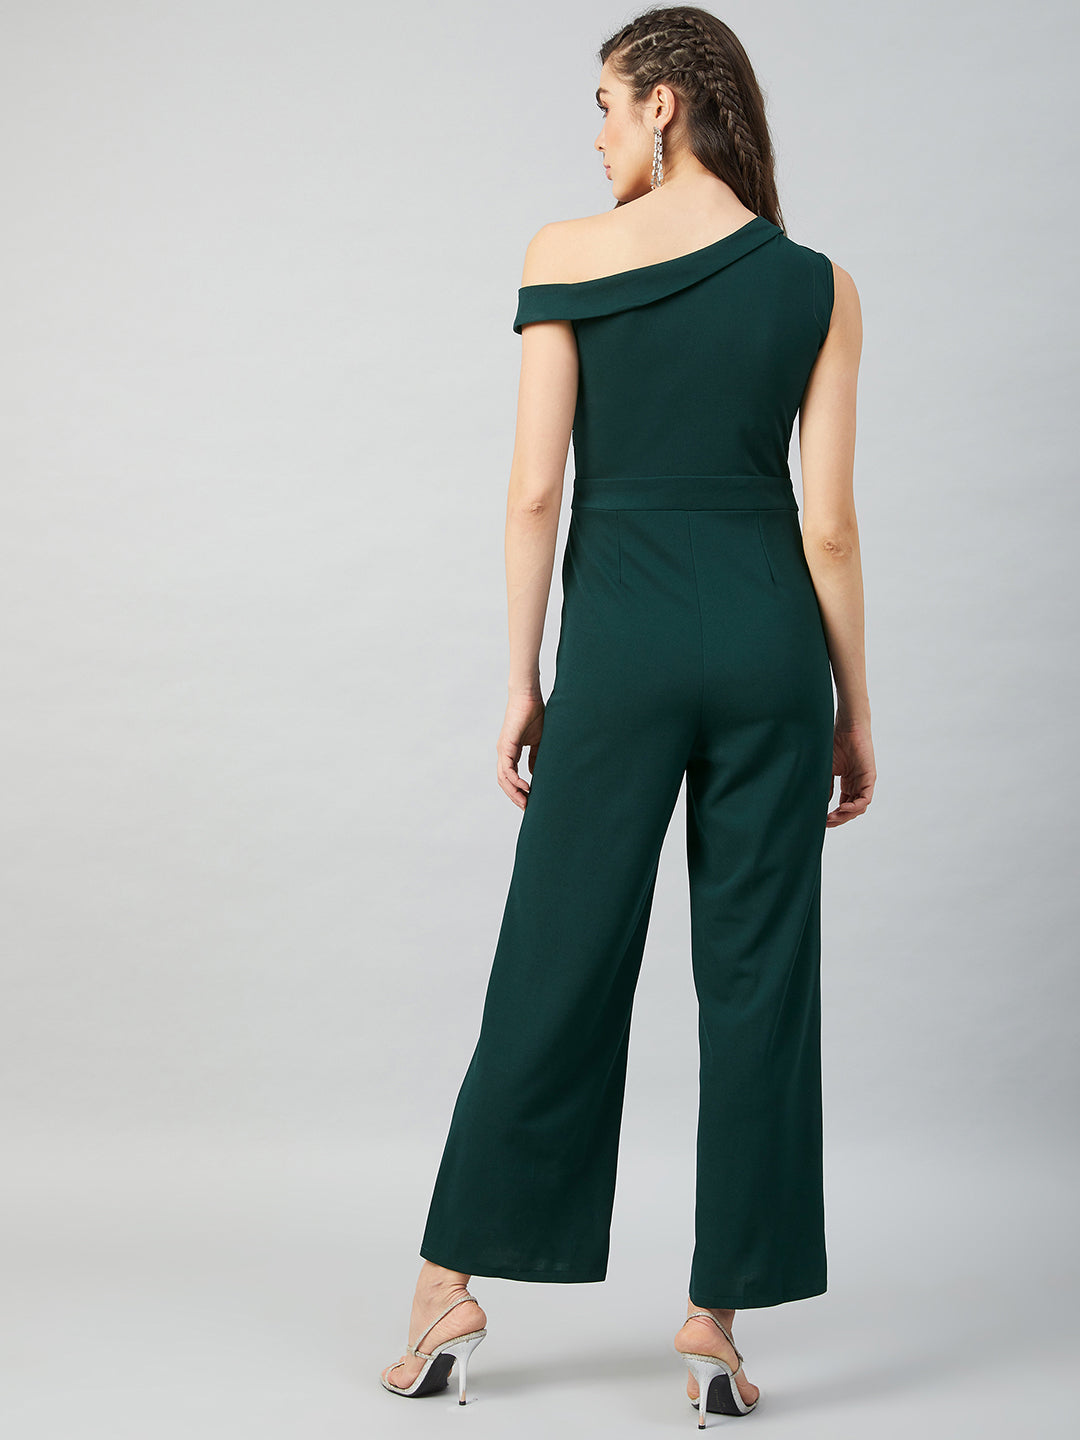 Athena Green Off-Shoulder Basic Jumpsuit with Embellished - Athena Lifestyle